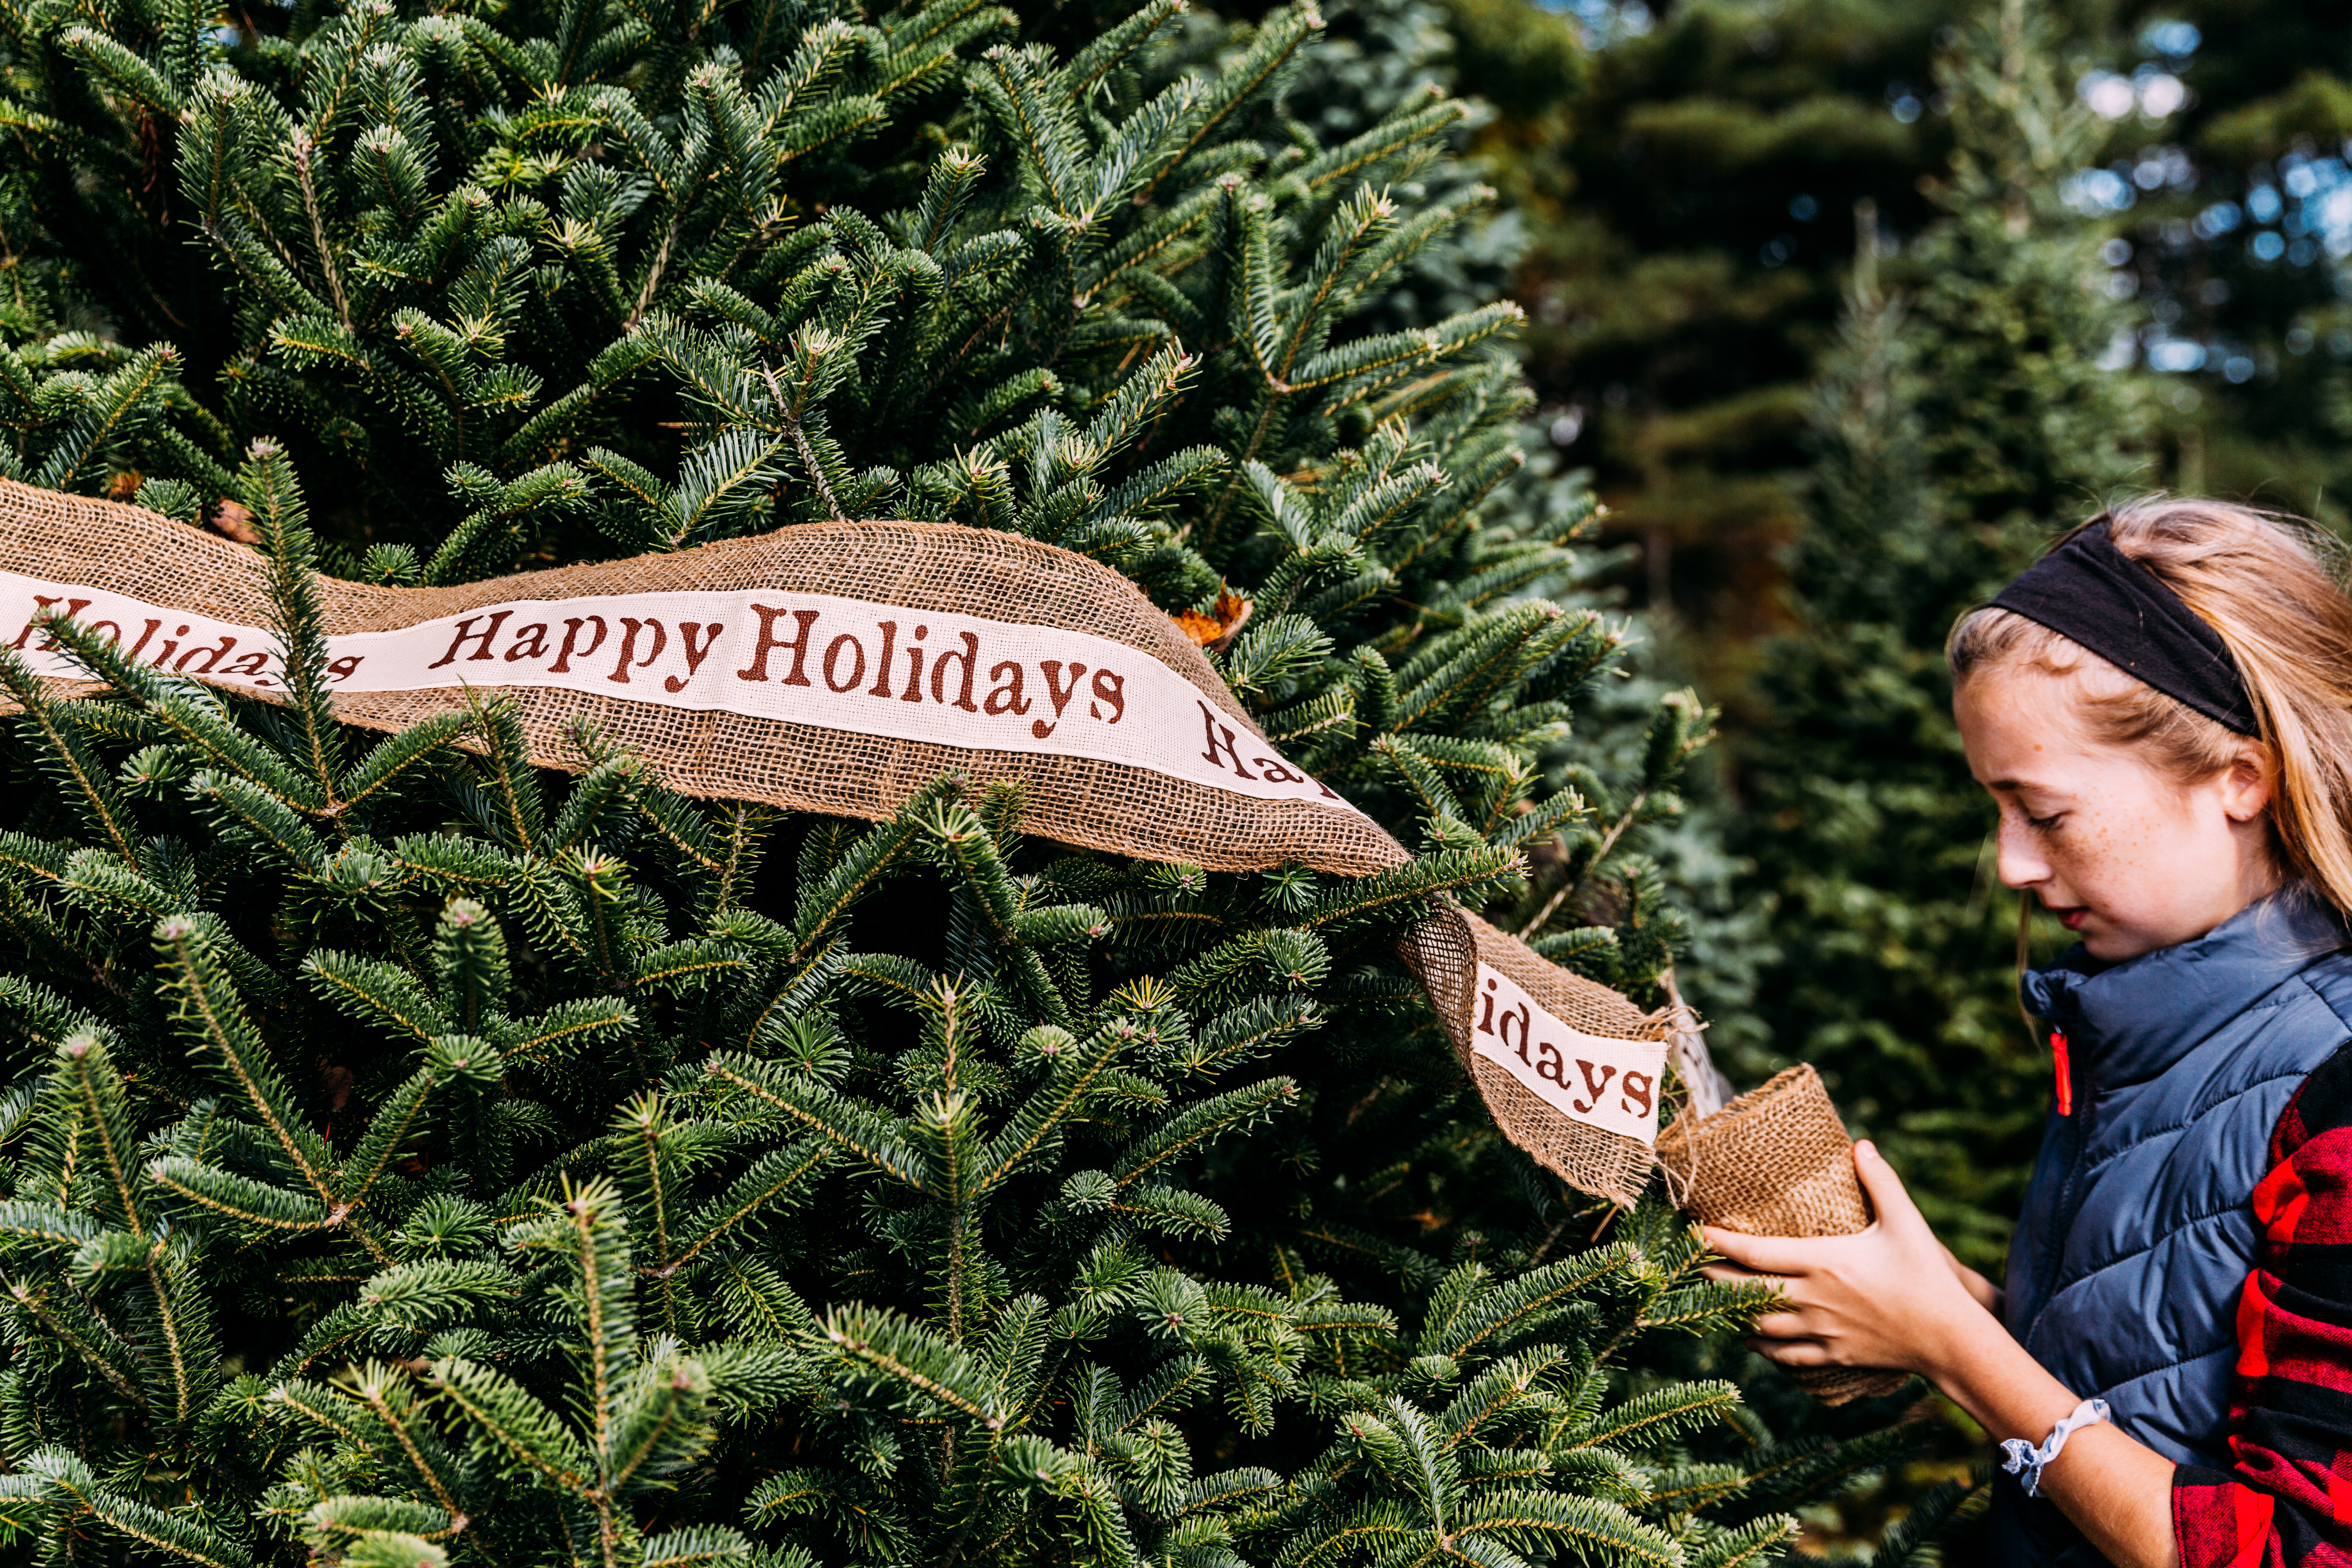 Happy Holidays banner on Christmas tree